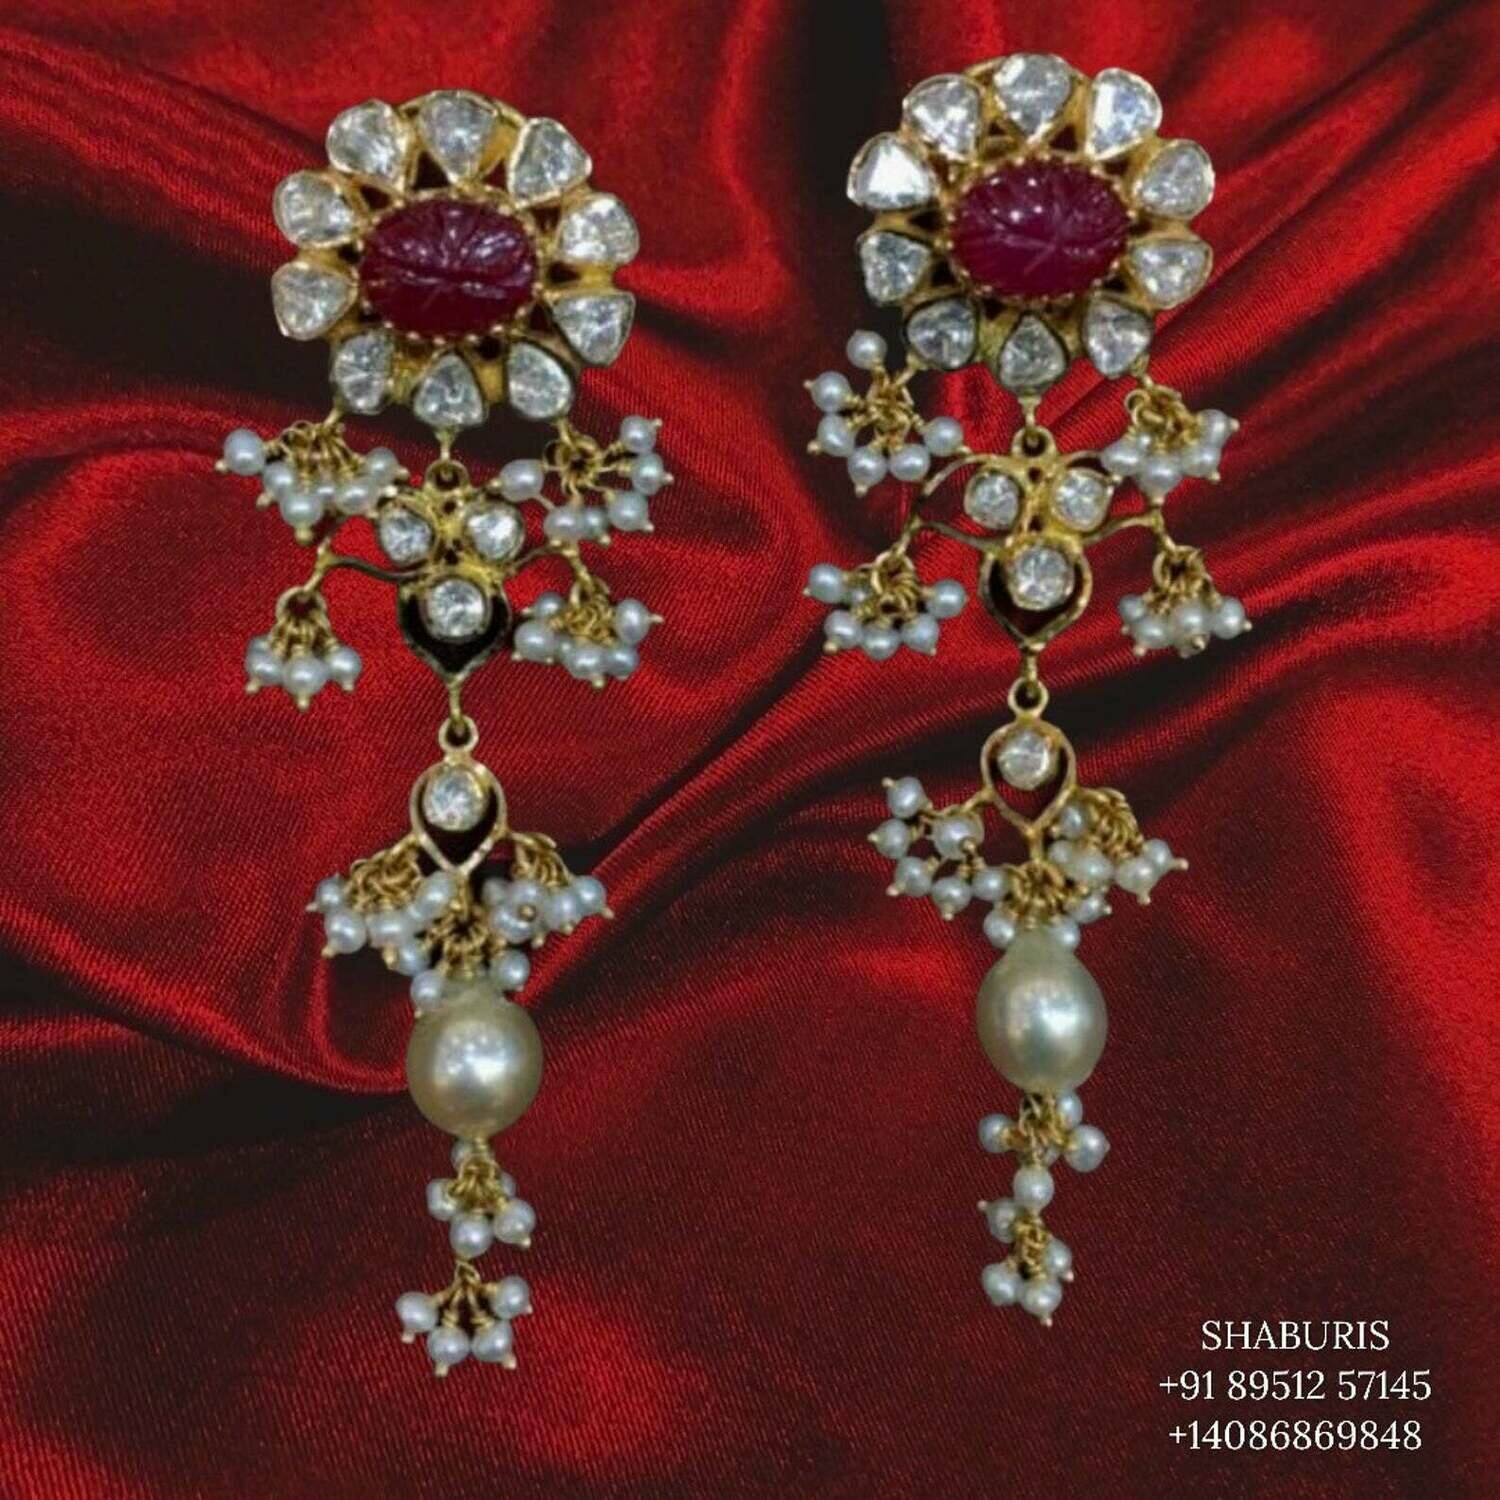 Indian Silver Jewelry,South Indian Jewellery,South Indian Jewelry,diamond earrings jewellery Designs,Indian Wedding-NIHIRA-SHABURIS